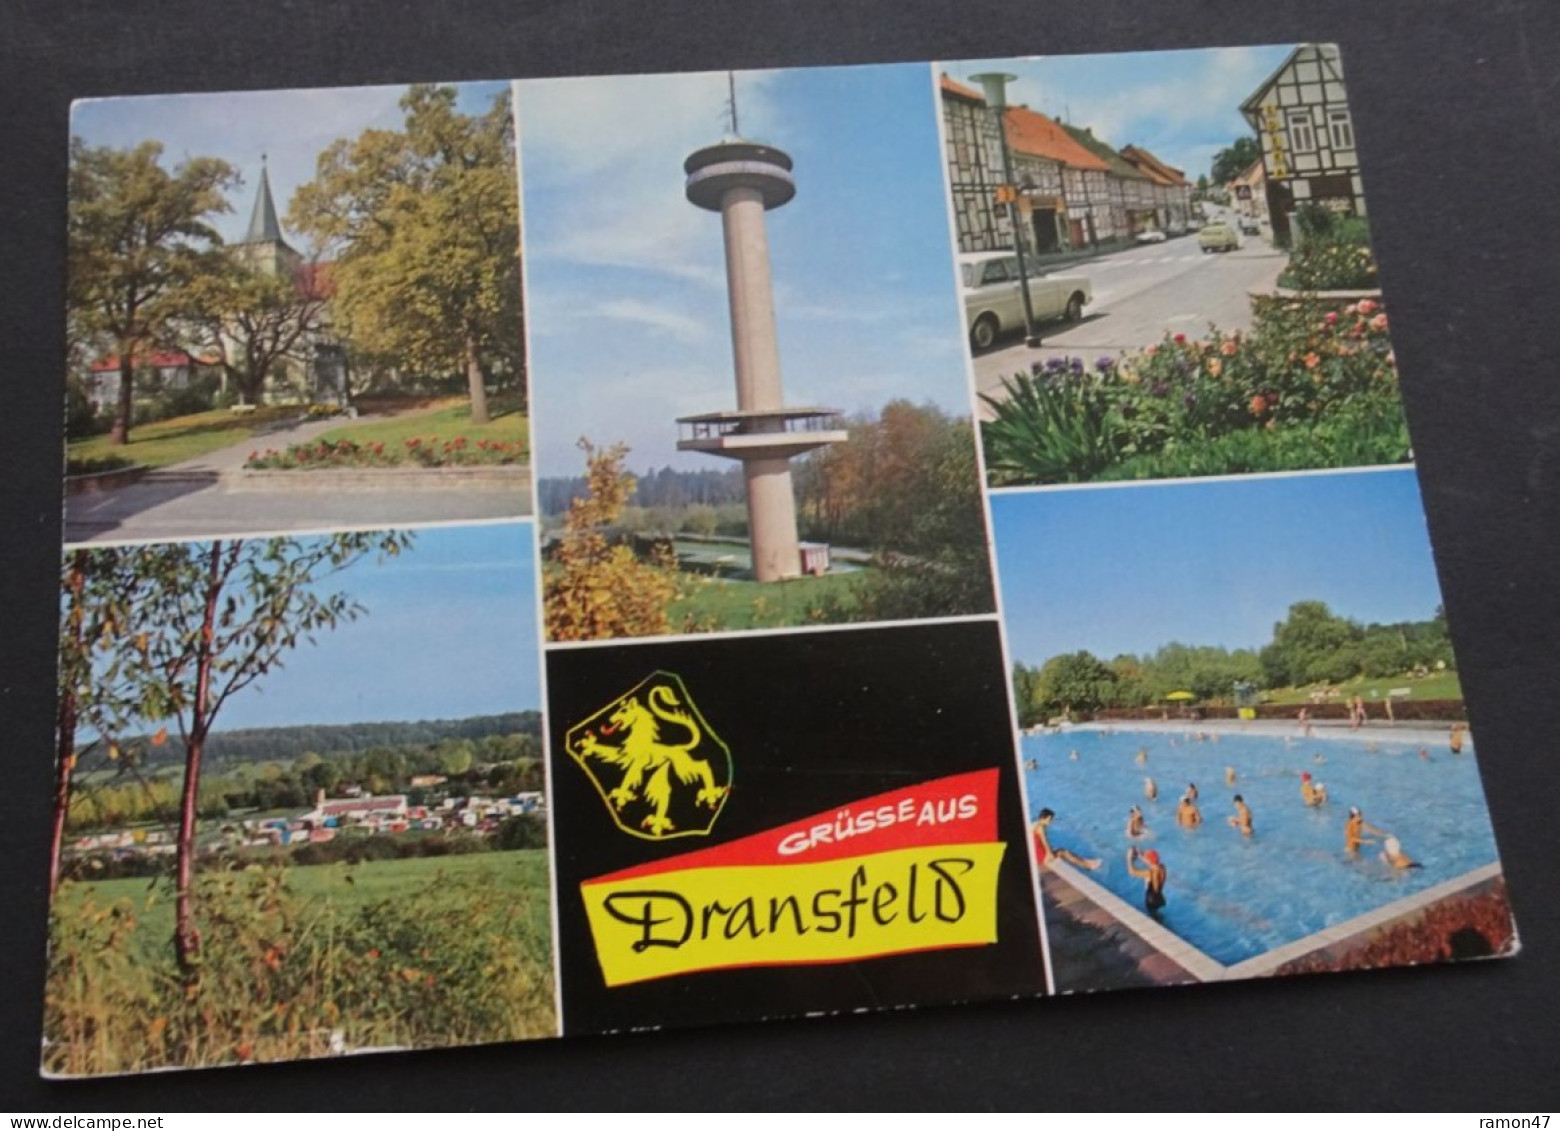 Grüsse Aus Dransfeld - Höhe Des Turmes 51 M - Norbert Grischke, Dransfeld - # Drf 03 - 81/5 - Saluti Da.../ Gruss Aus...